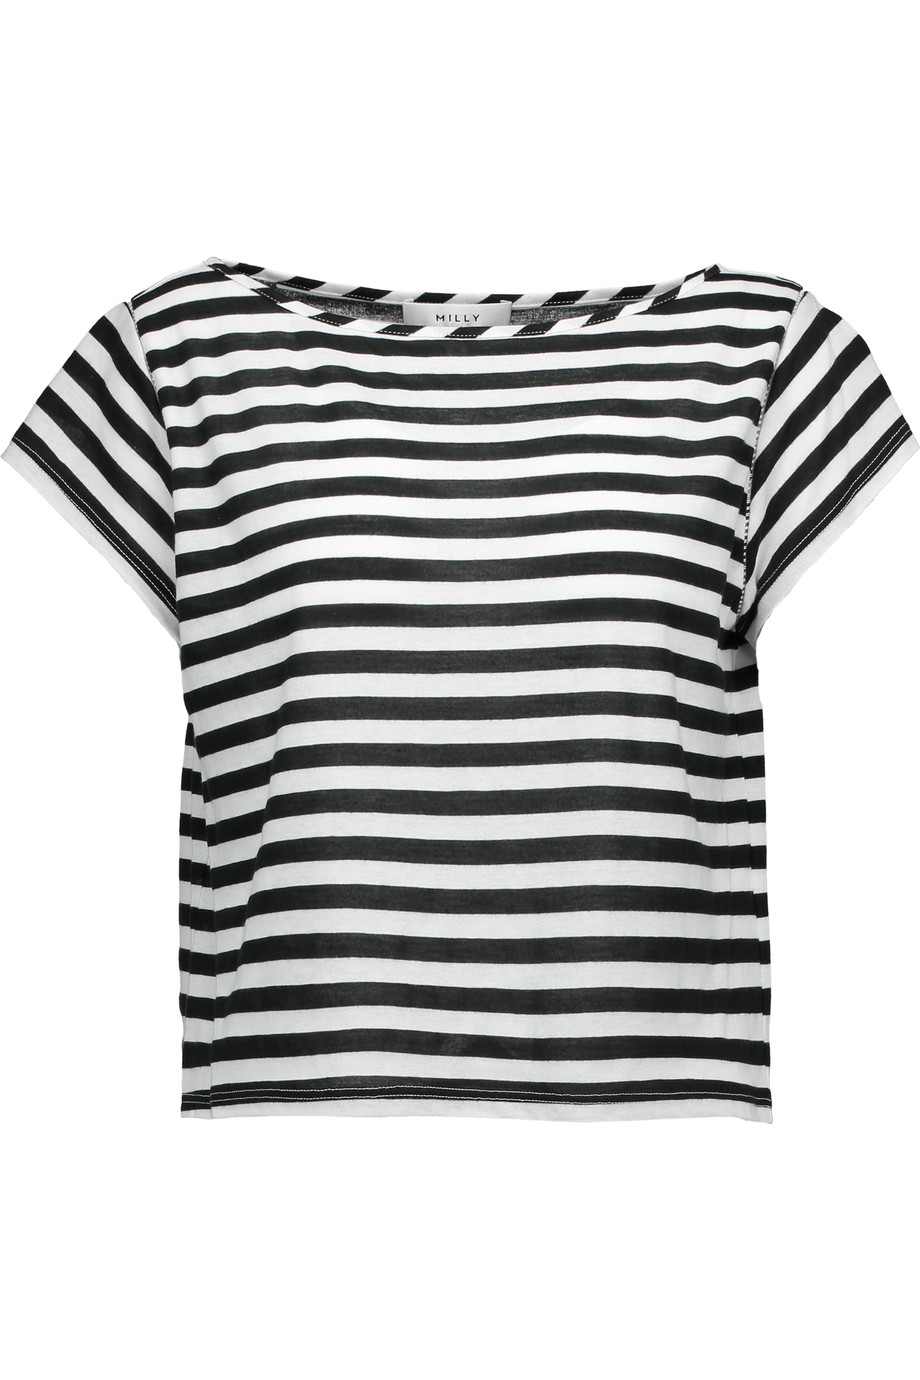 Milly Striped Cotton-blend T-shirt | ModeSens